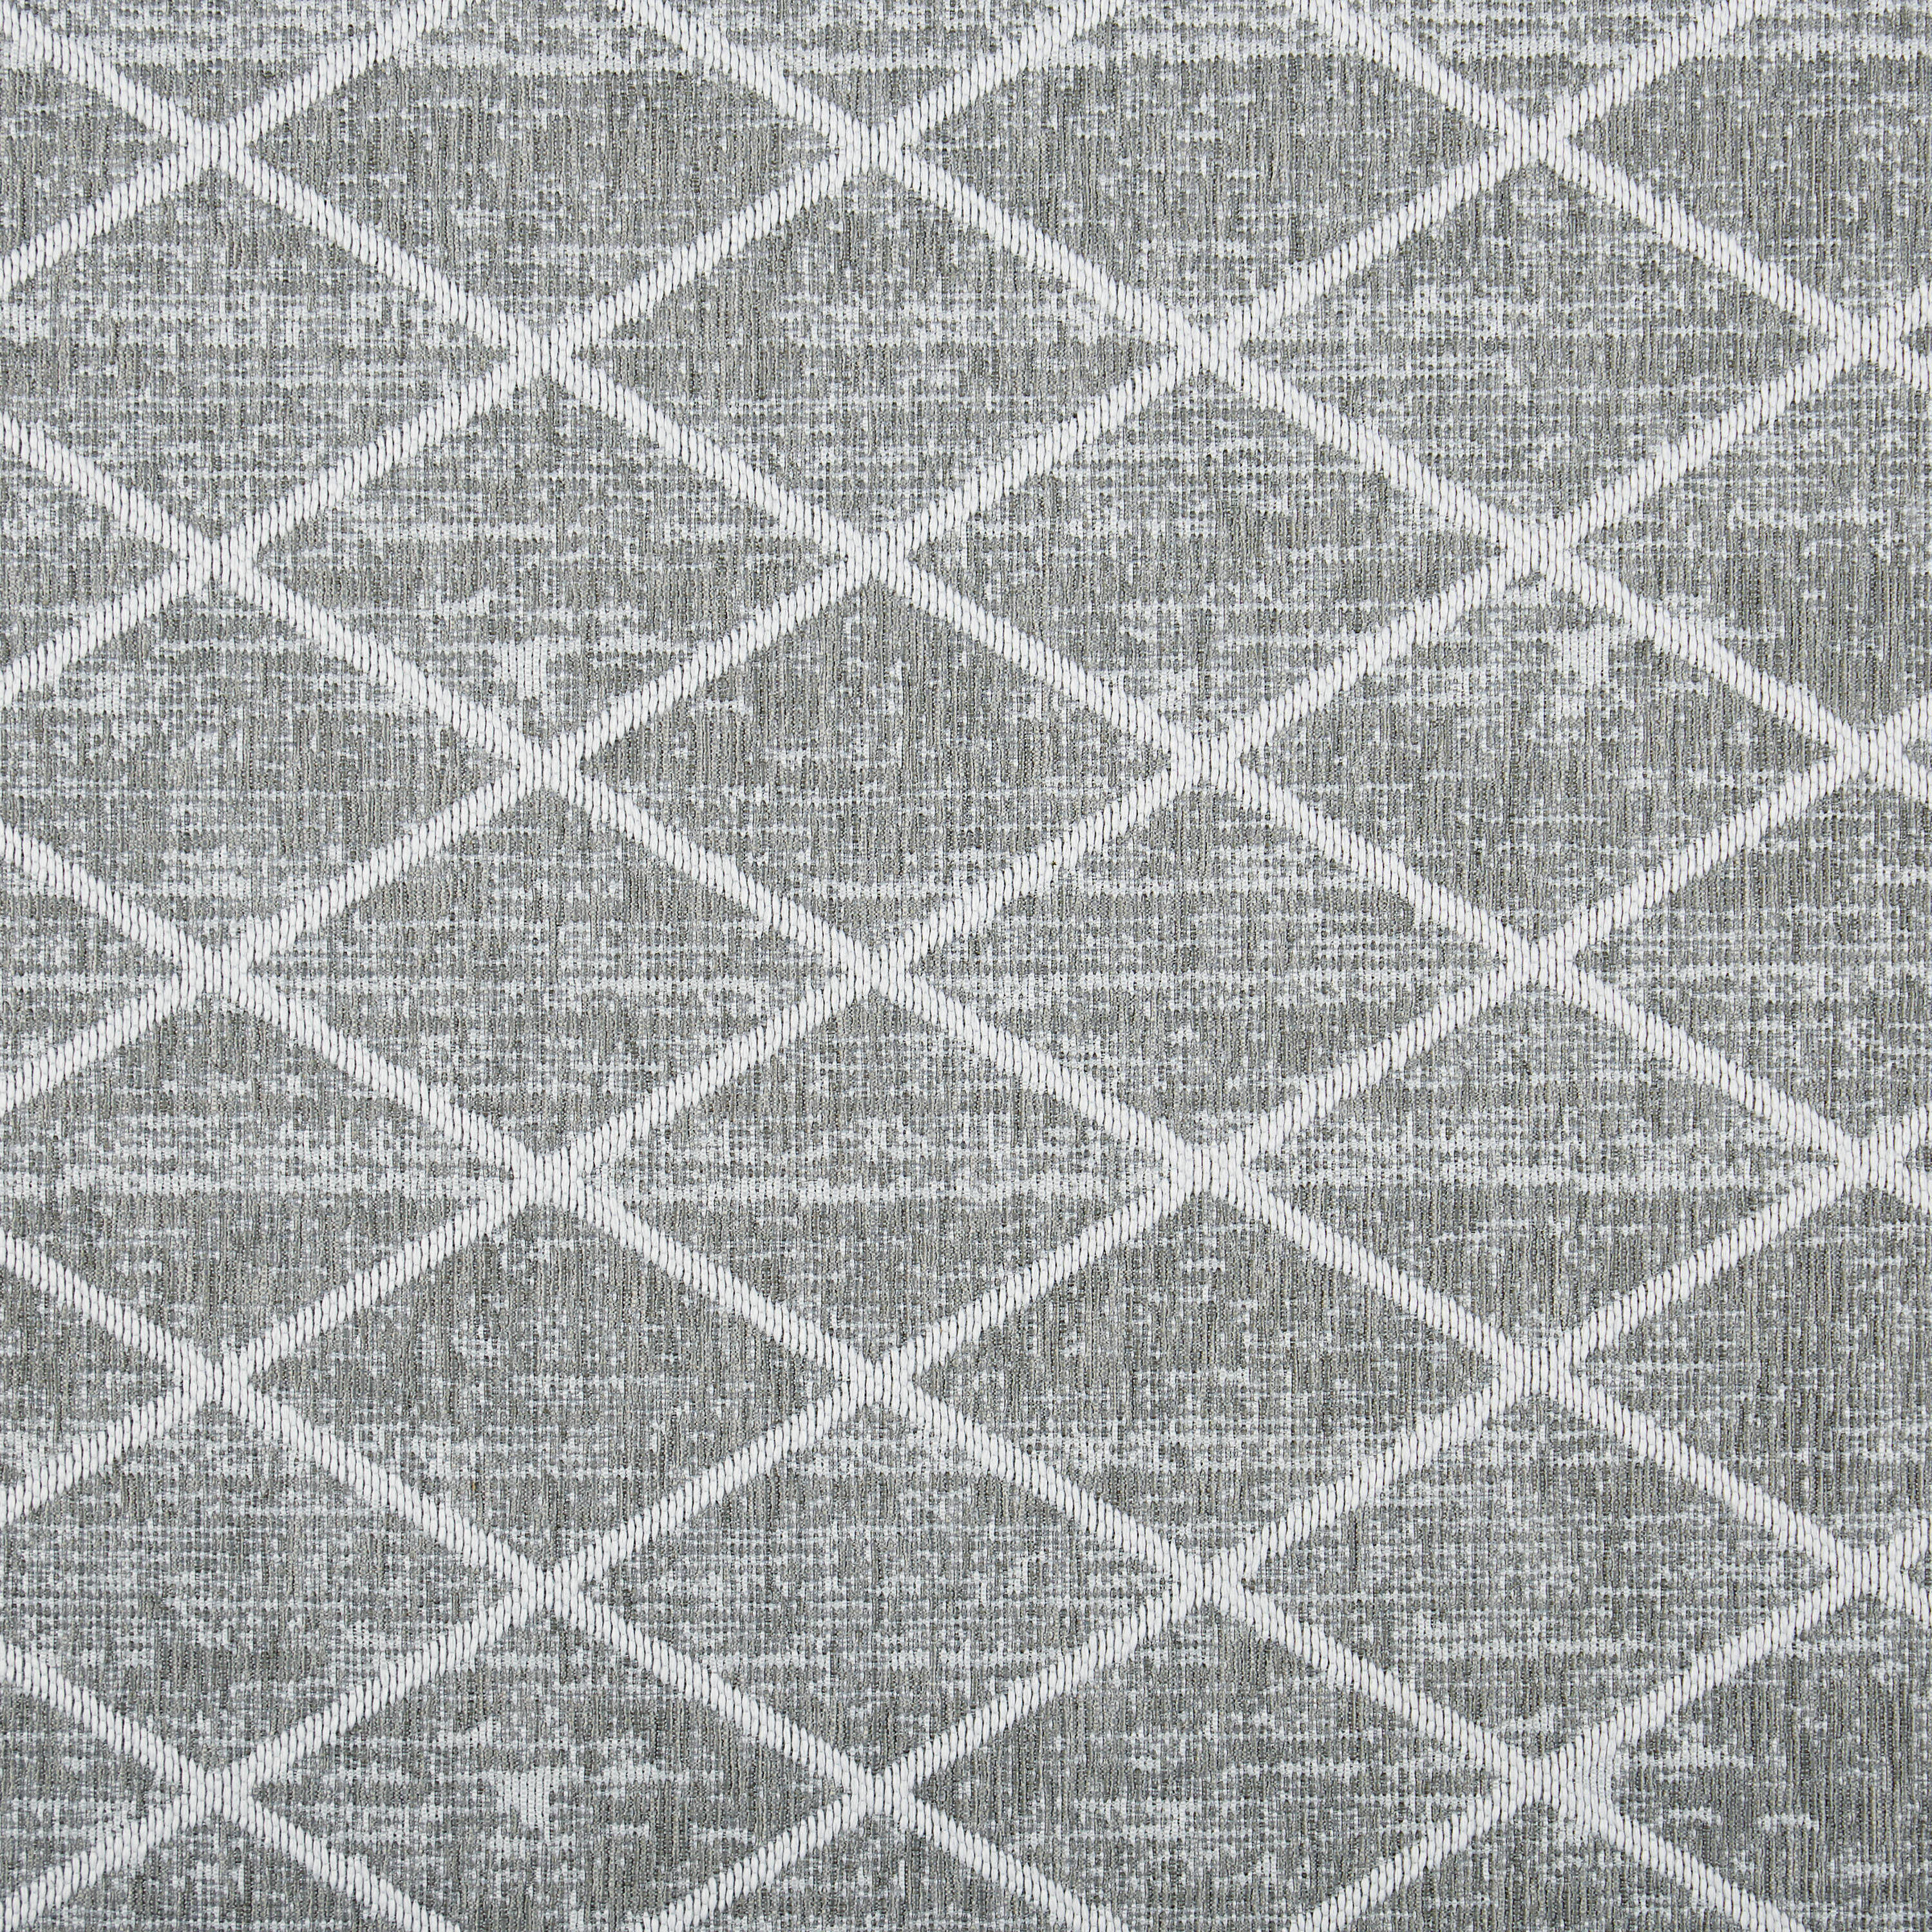 KSP Textaline Anti-Fatigue Memory Foam Mat (Grey)